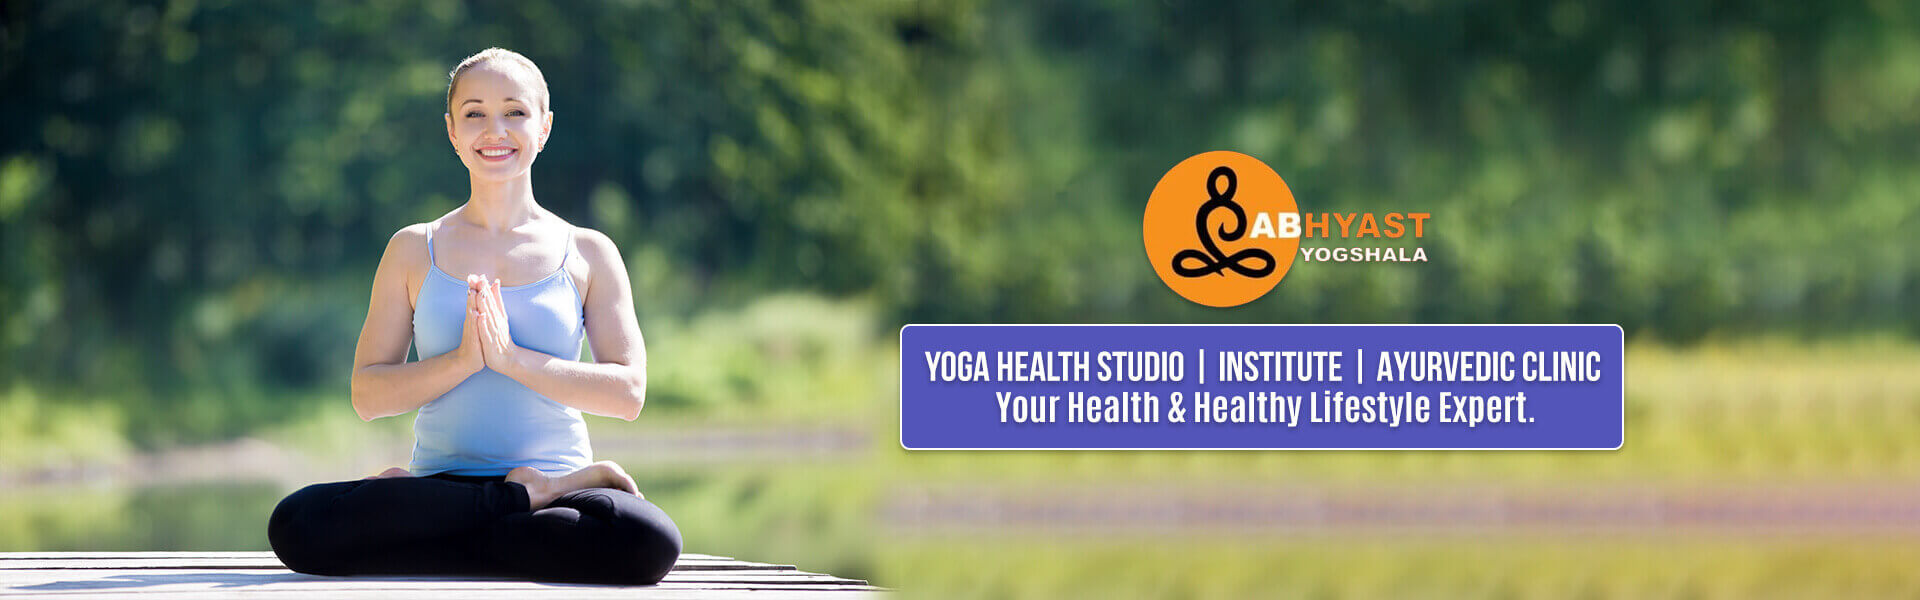 Yoga Teacher Training Course in Gurgaon, Yoga Studio Classes